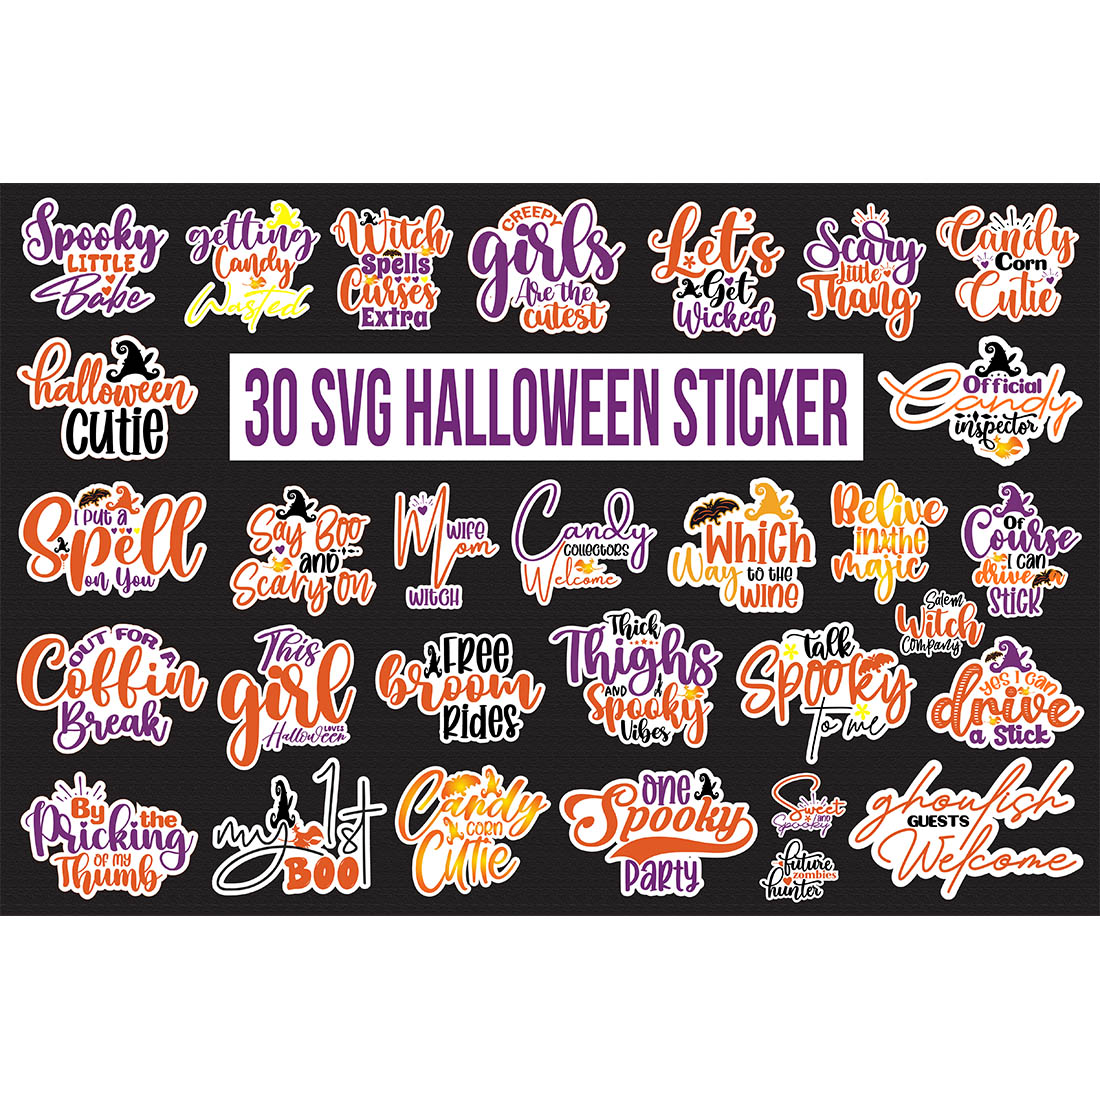 30 SVG Retro Christmas Bundle, Holiday Graphic, Halloween SVG Bundle, sticker halloween, preview image.